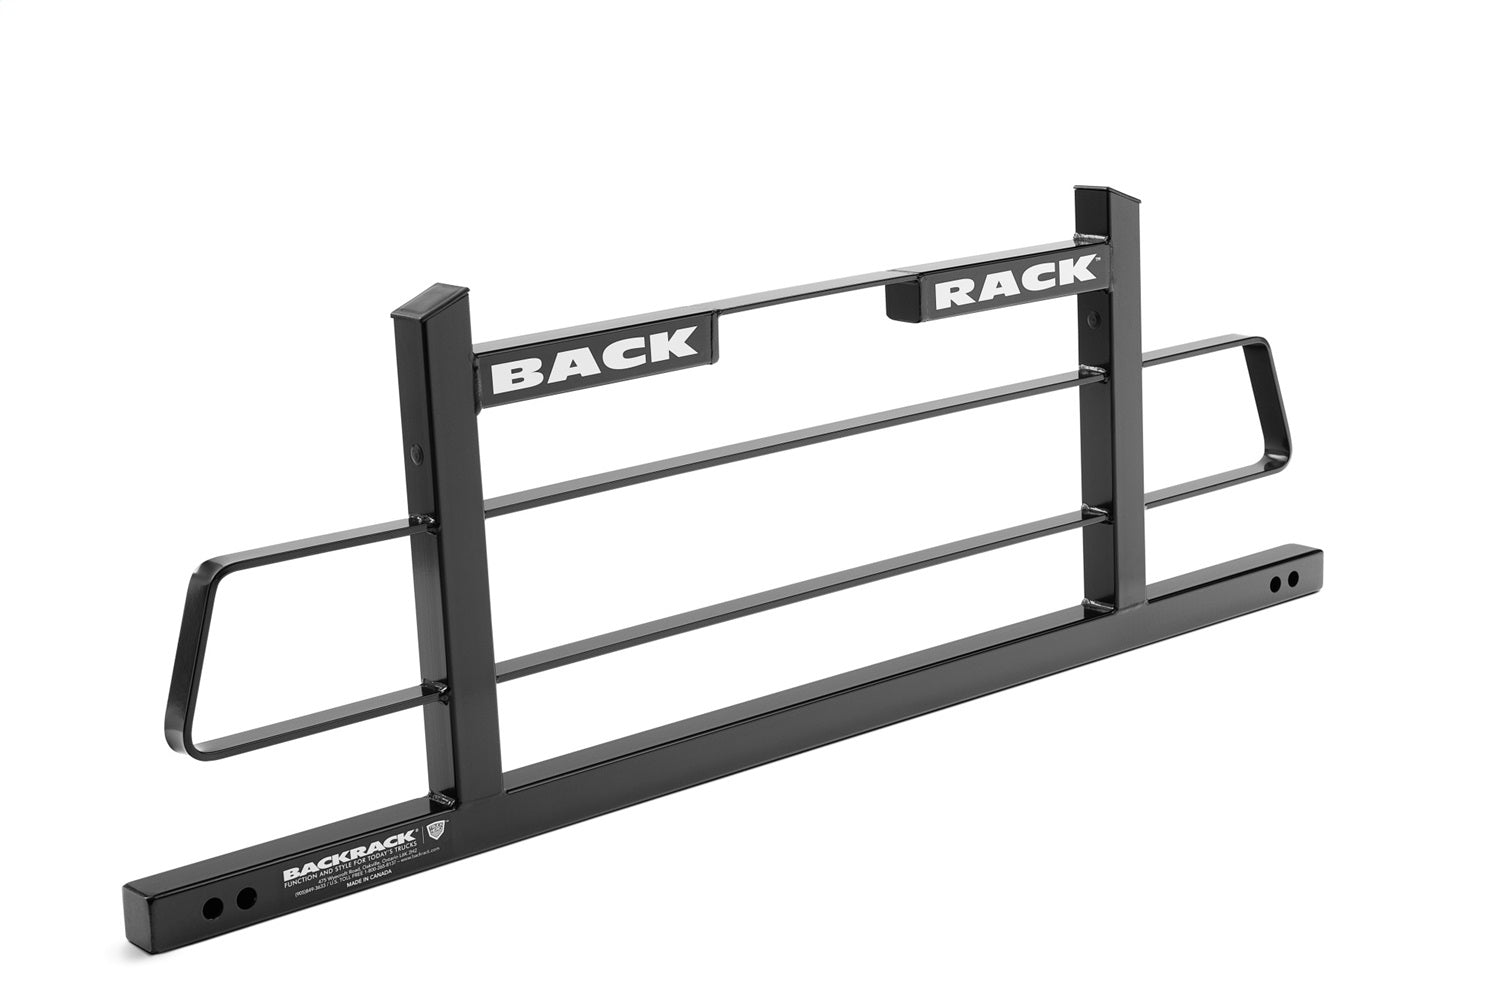 Backrack 15017 Backrack Headache Rack Frame